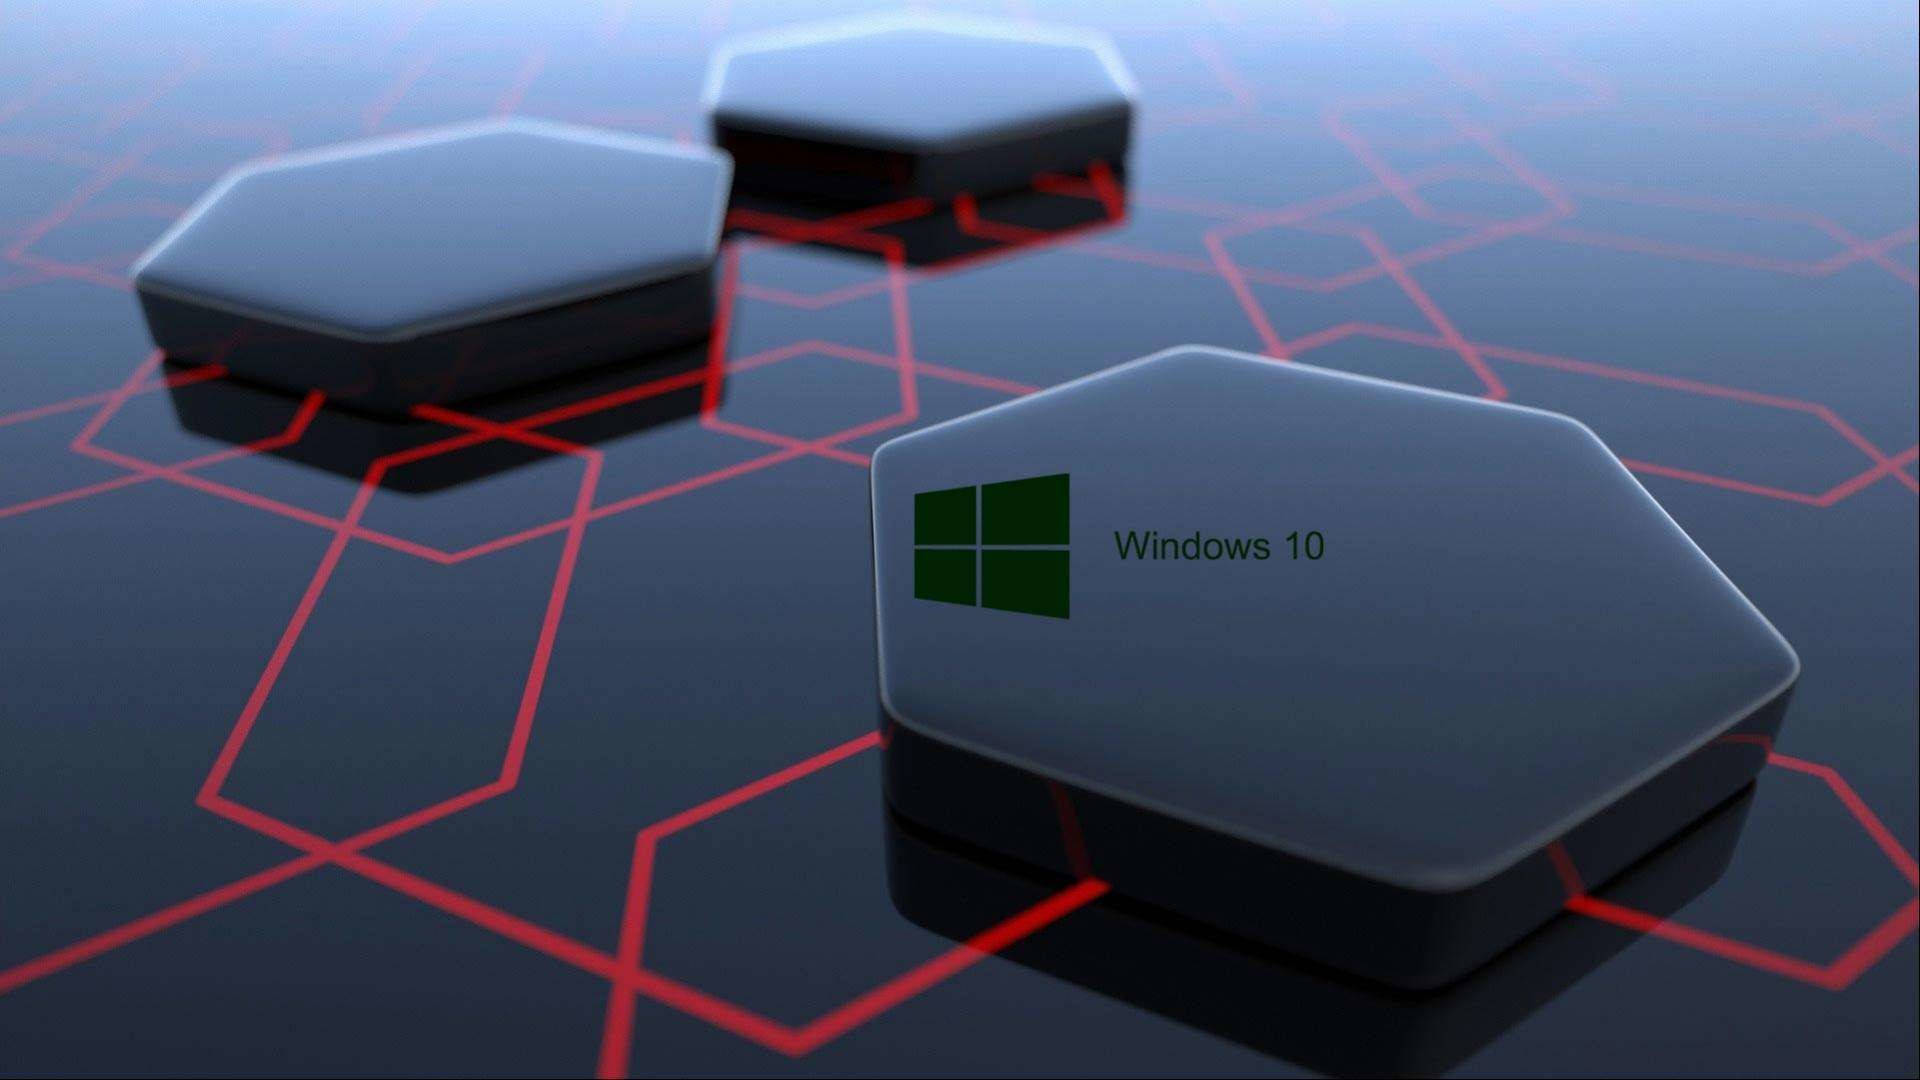 Black Windows 10 Hd Futuristic Shapes Wallpaper